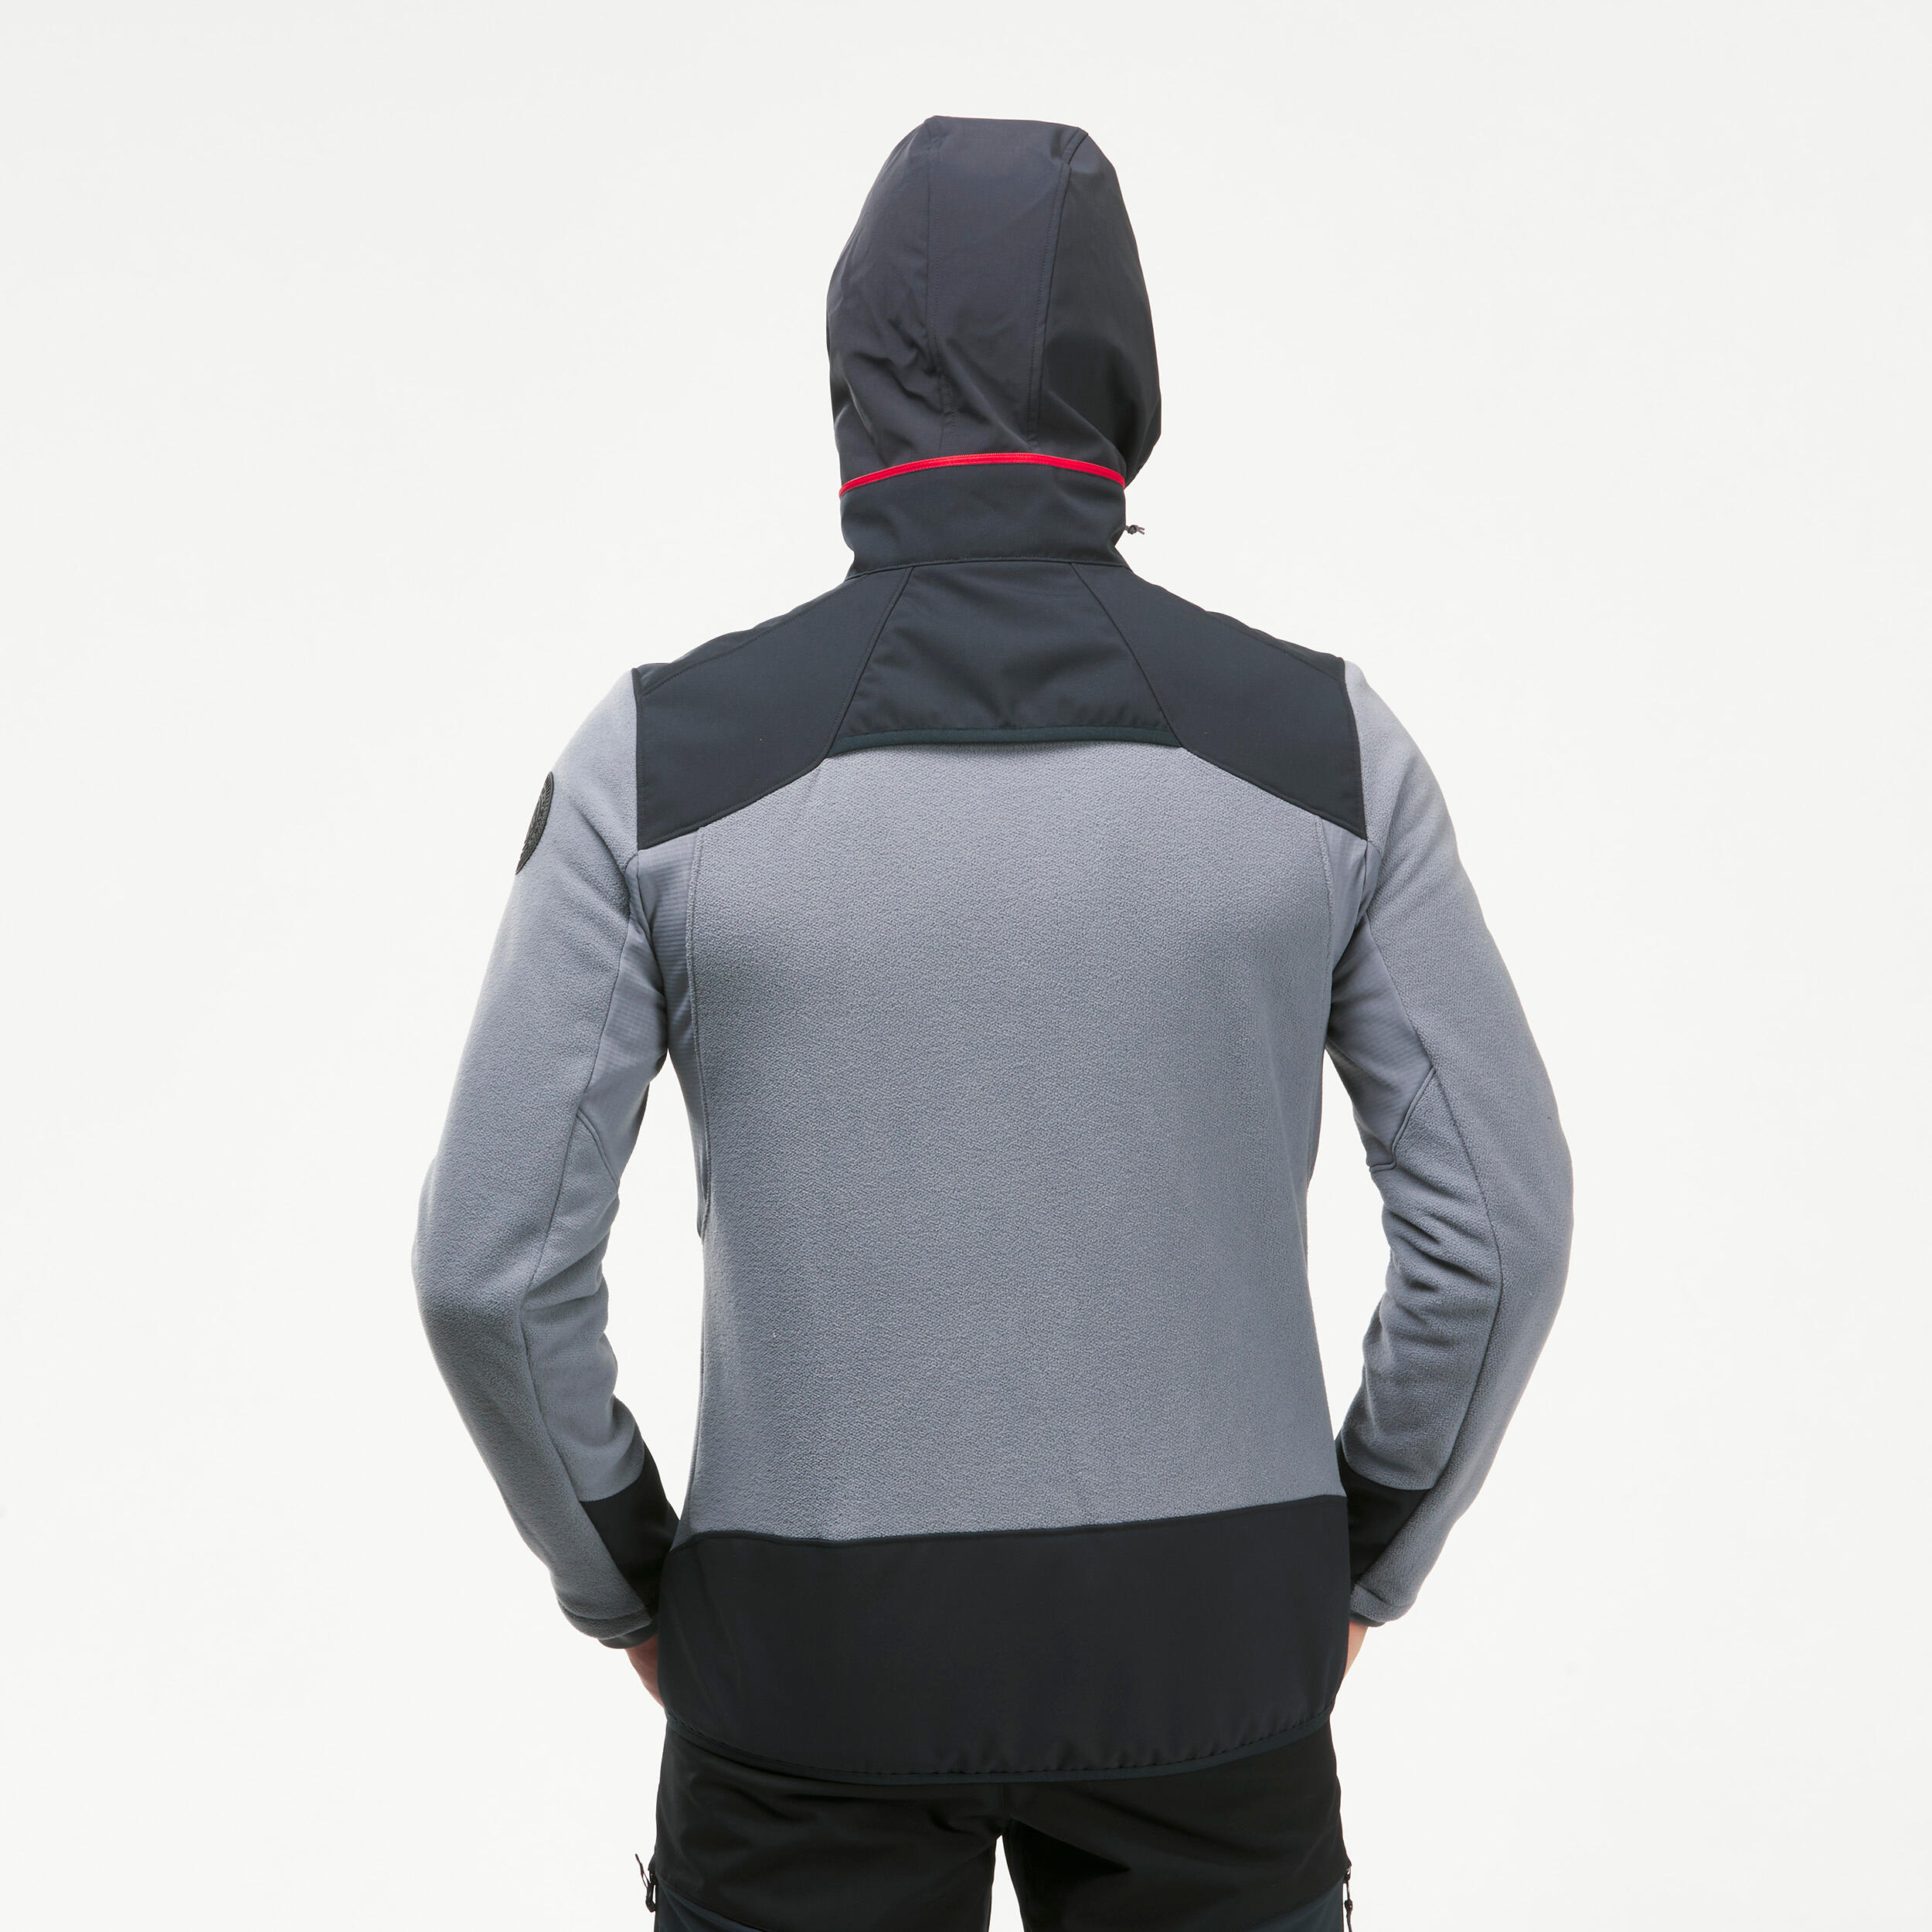 Men's Hiking Warm Fleece Jacket SH500 X-Warm. 10/10